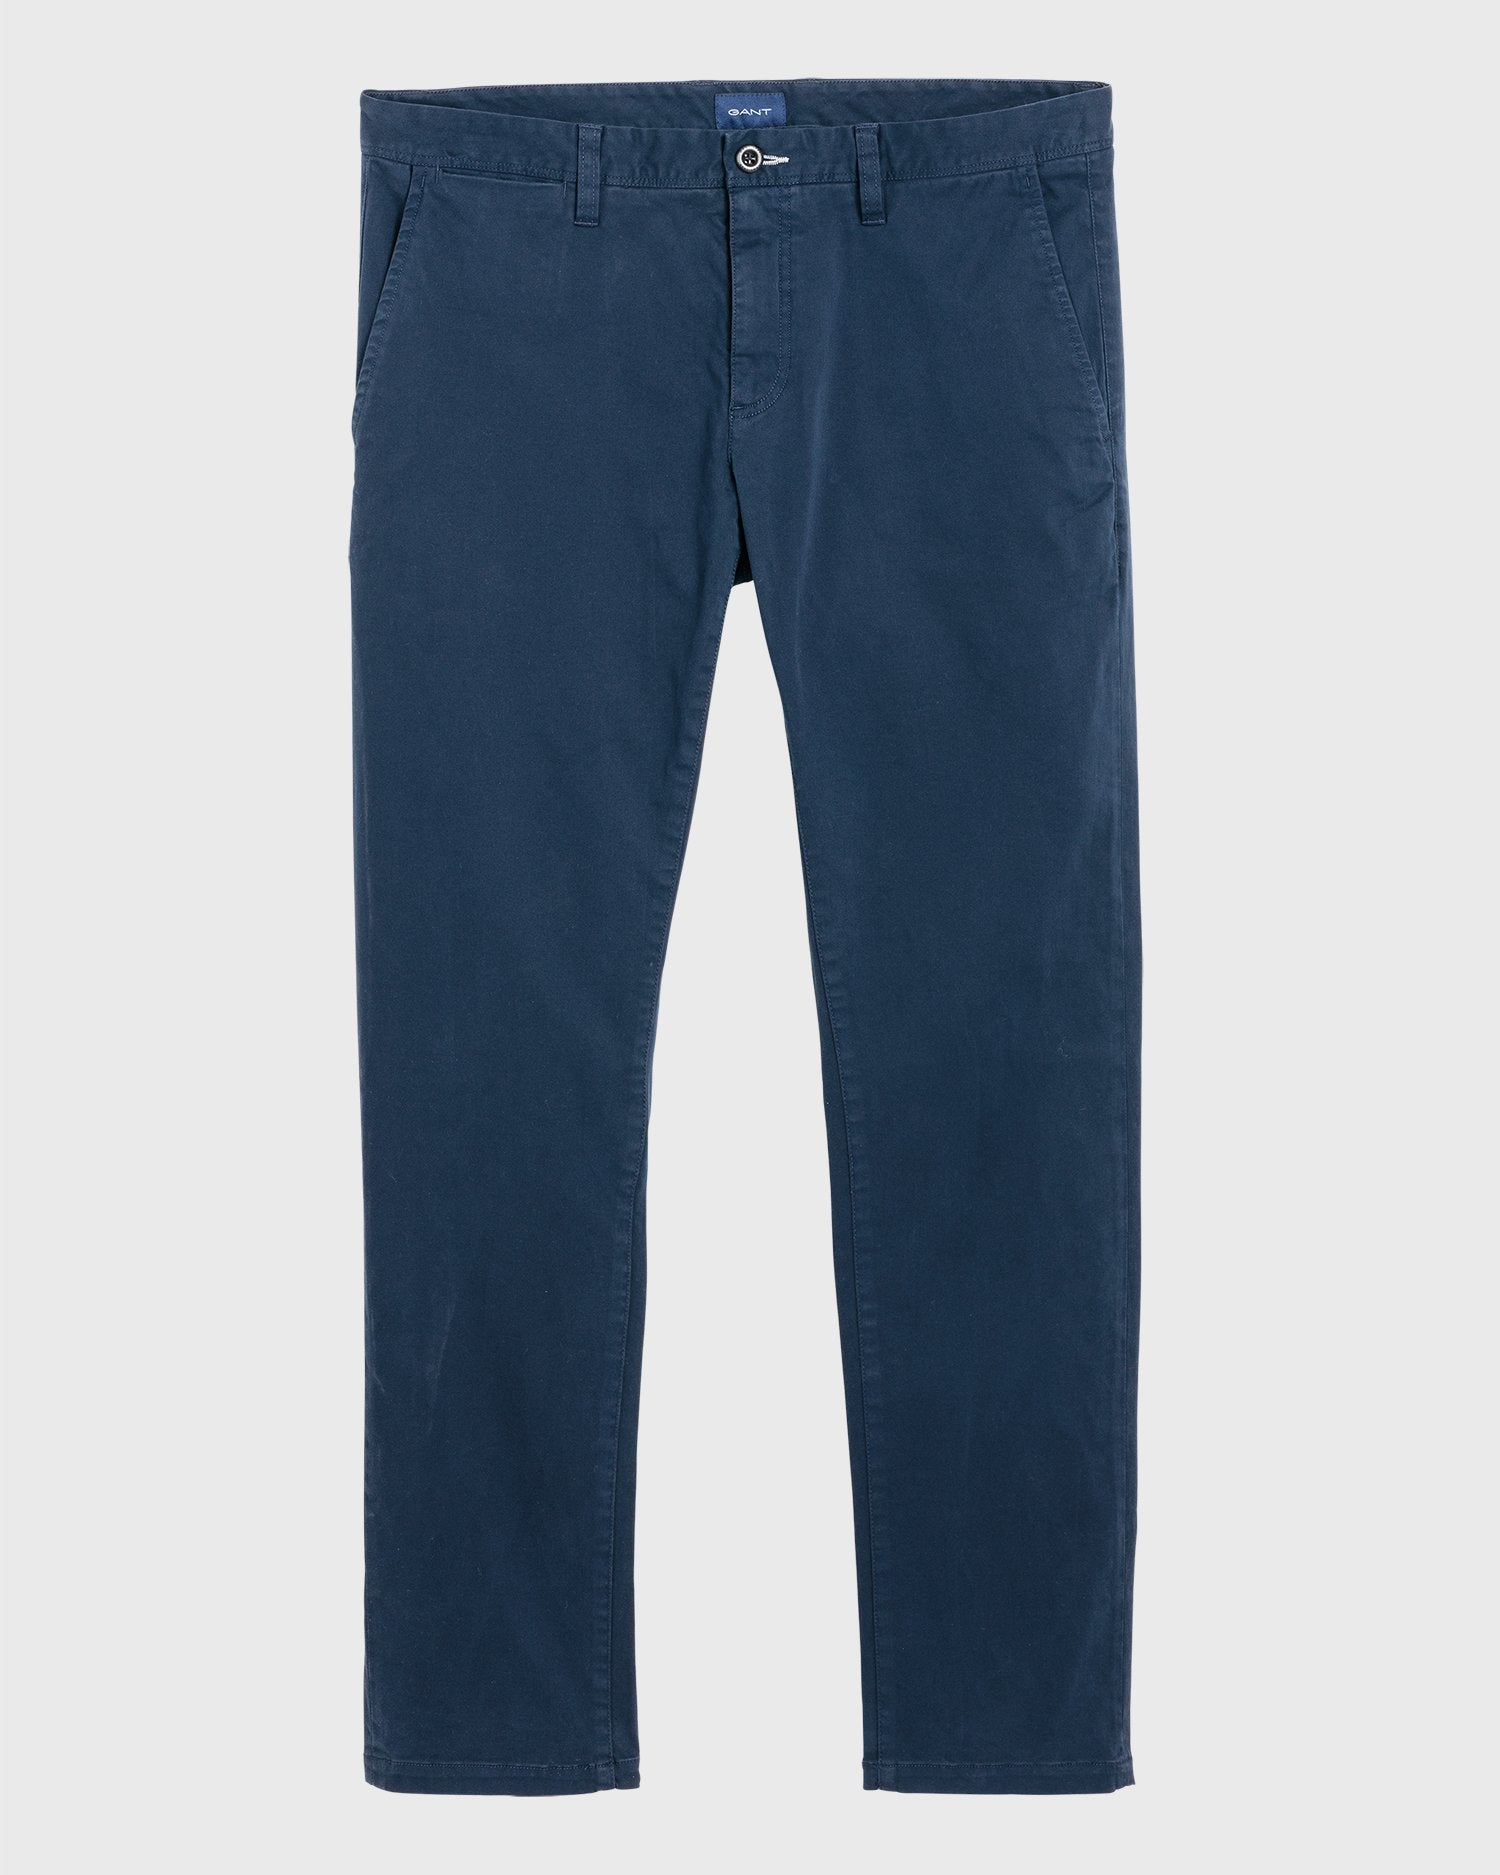 Gant 1500011-410 Slim Satin Chino Pantalone Cotone Uomo NAVY Blue